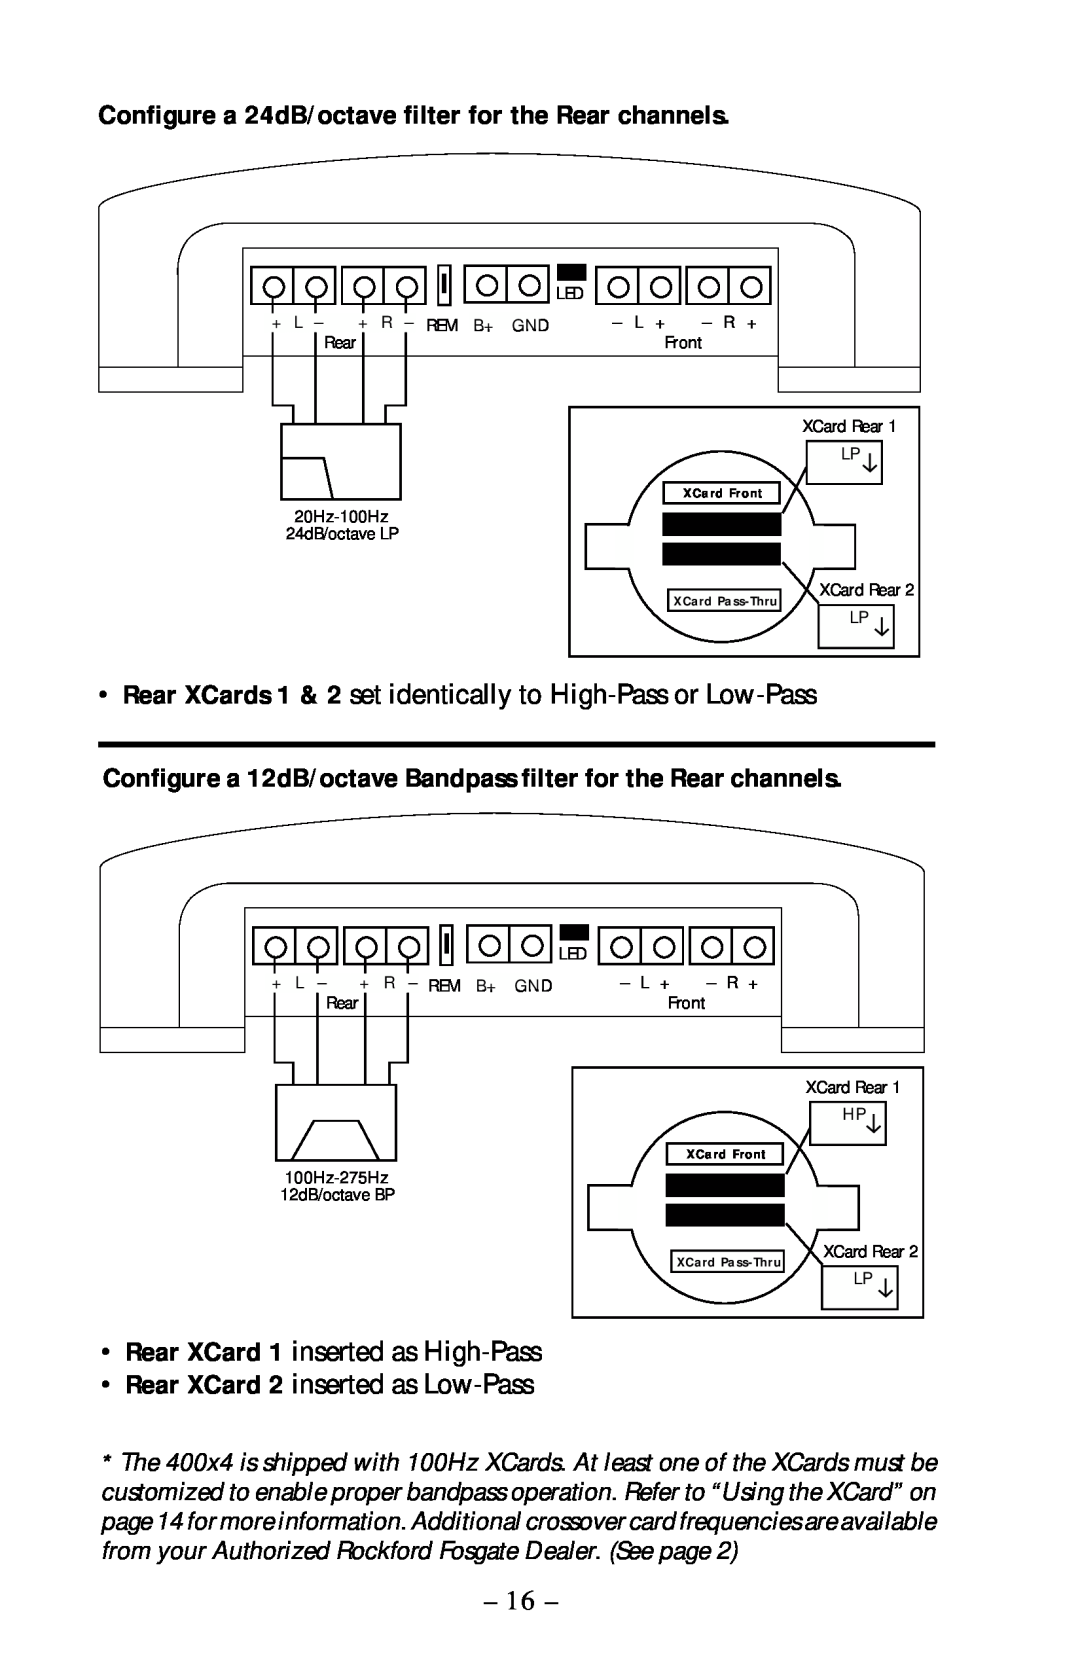 Rockford Fosgate 400x4 operation manual Rear XCard 1 inserted as High-Pass, Rear XCard 2 inserted as Low-Pass 